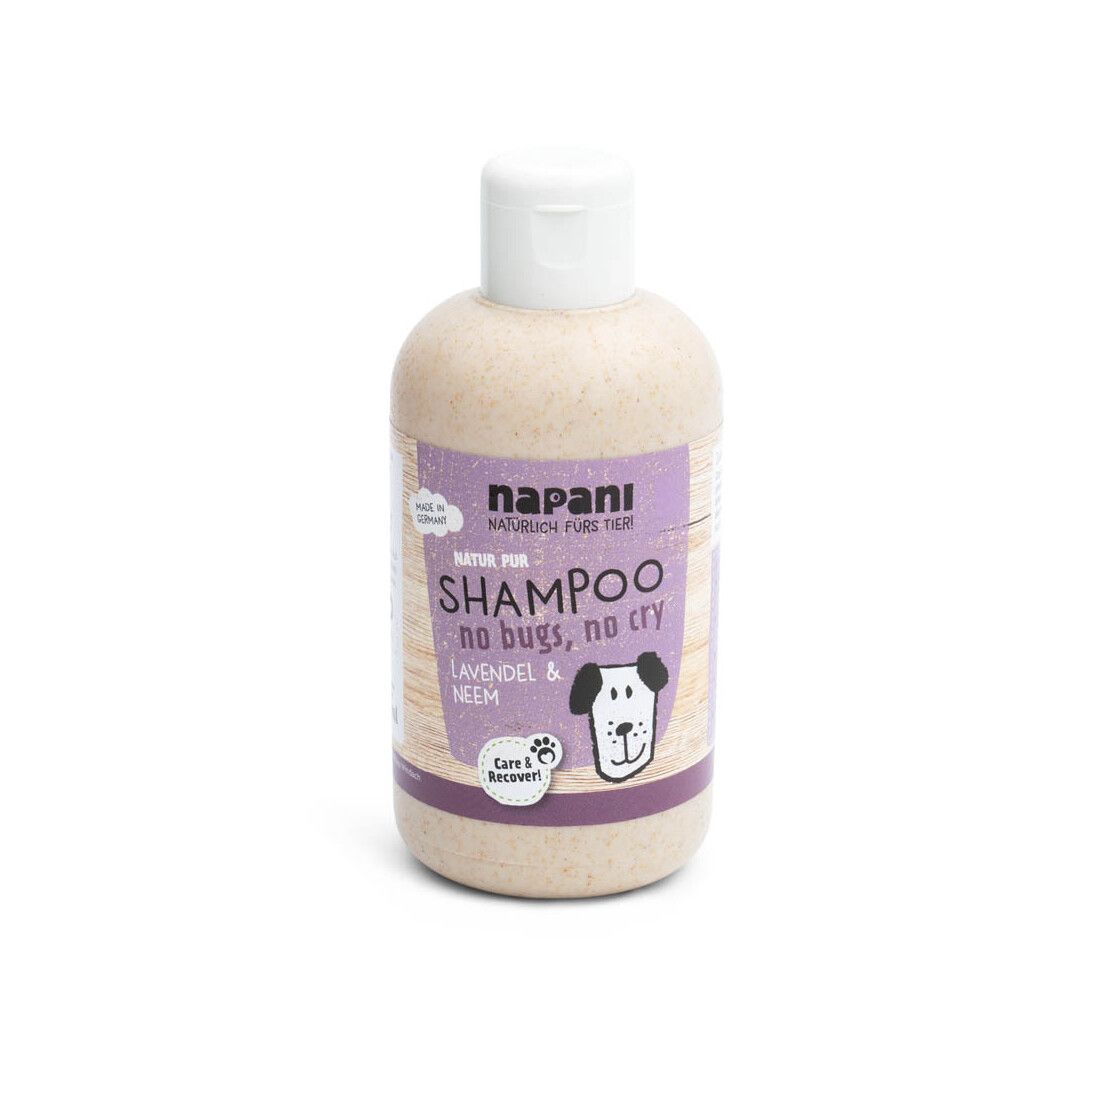 napani - Shampoo 'no bugs, no cry' für Hunde mit Lavendel und Neem